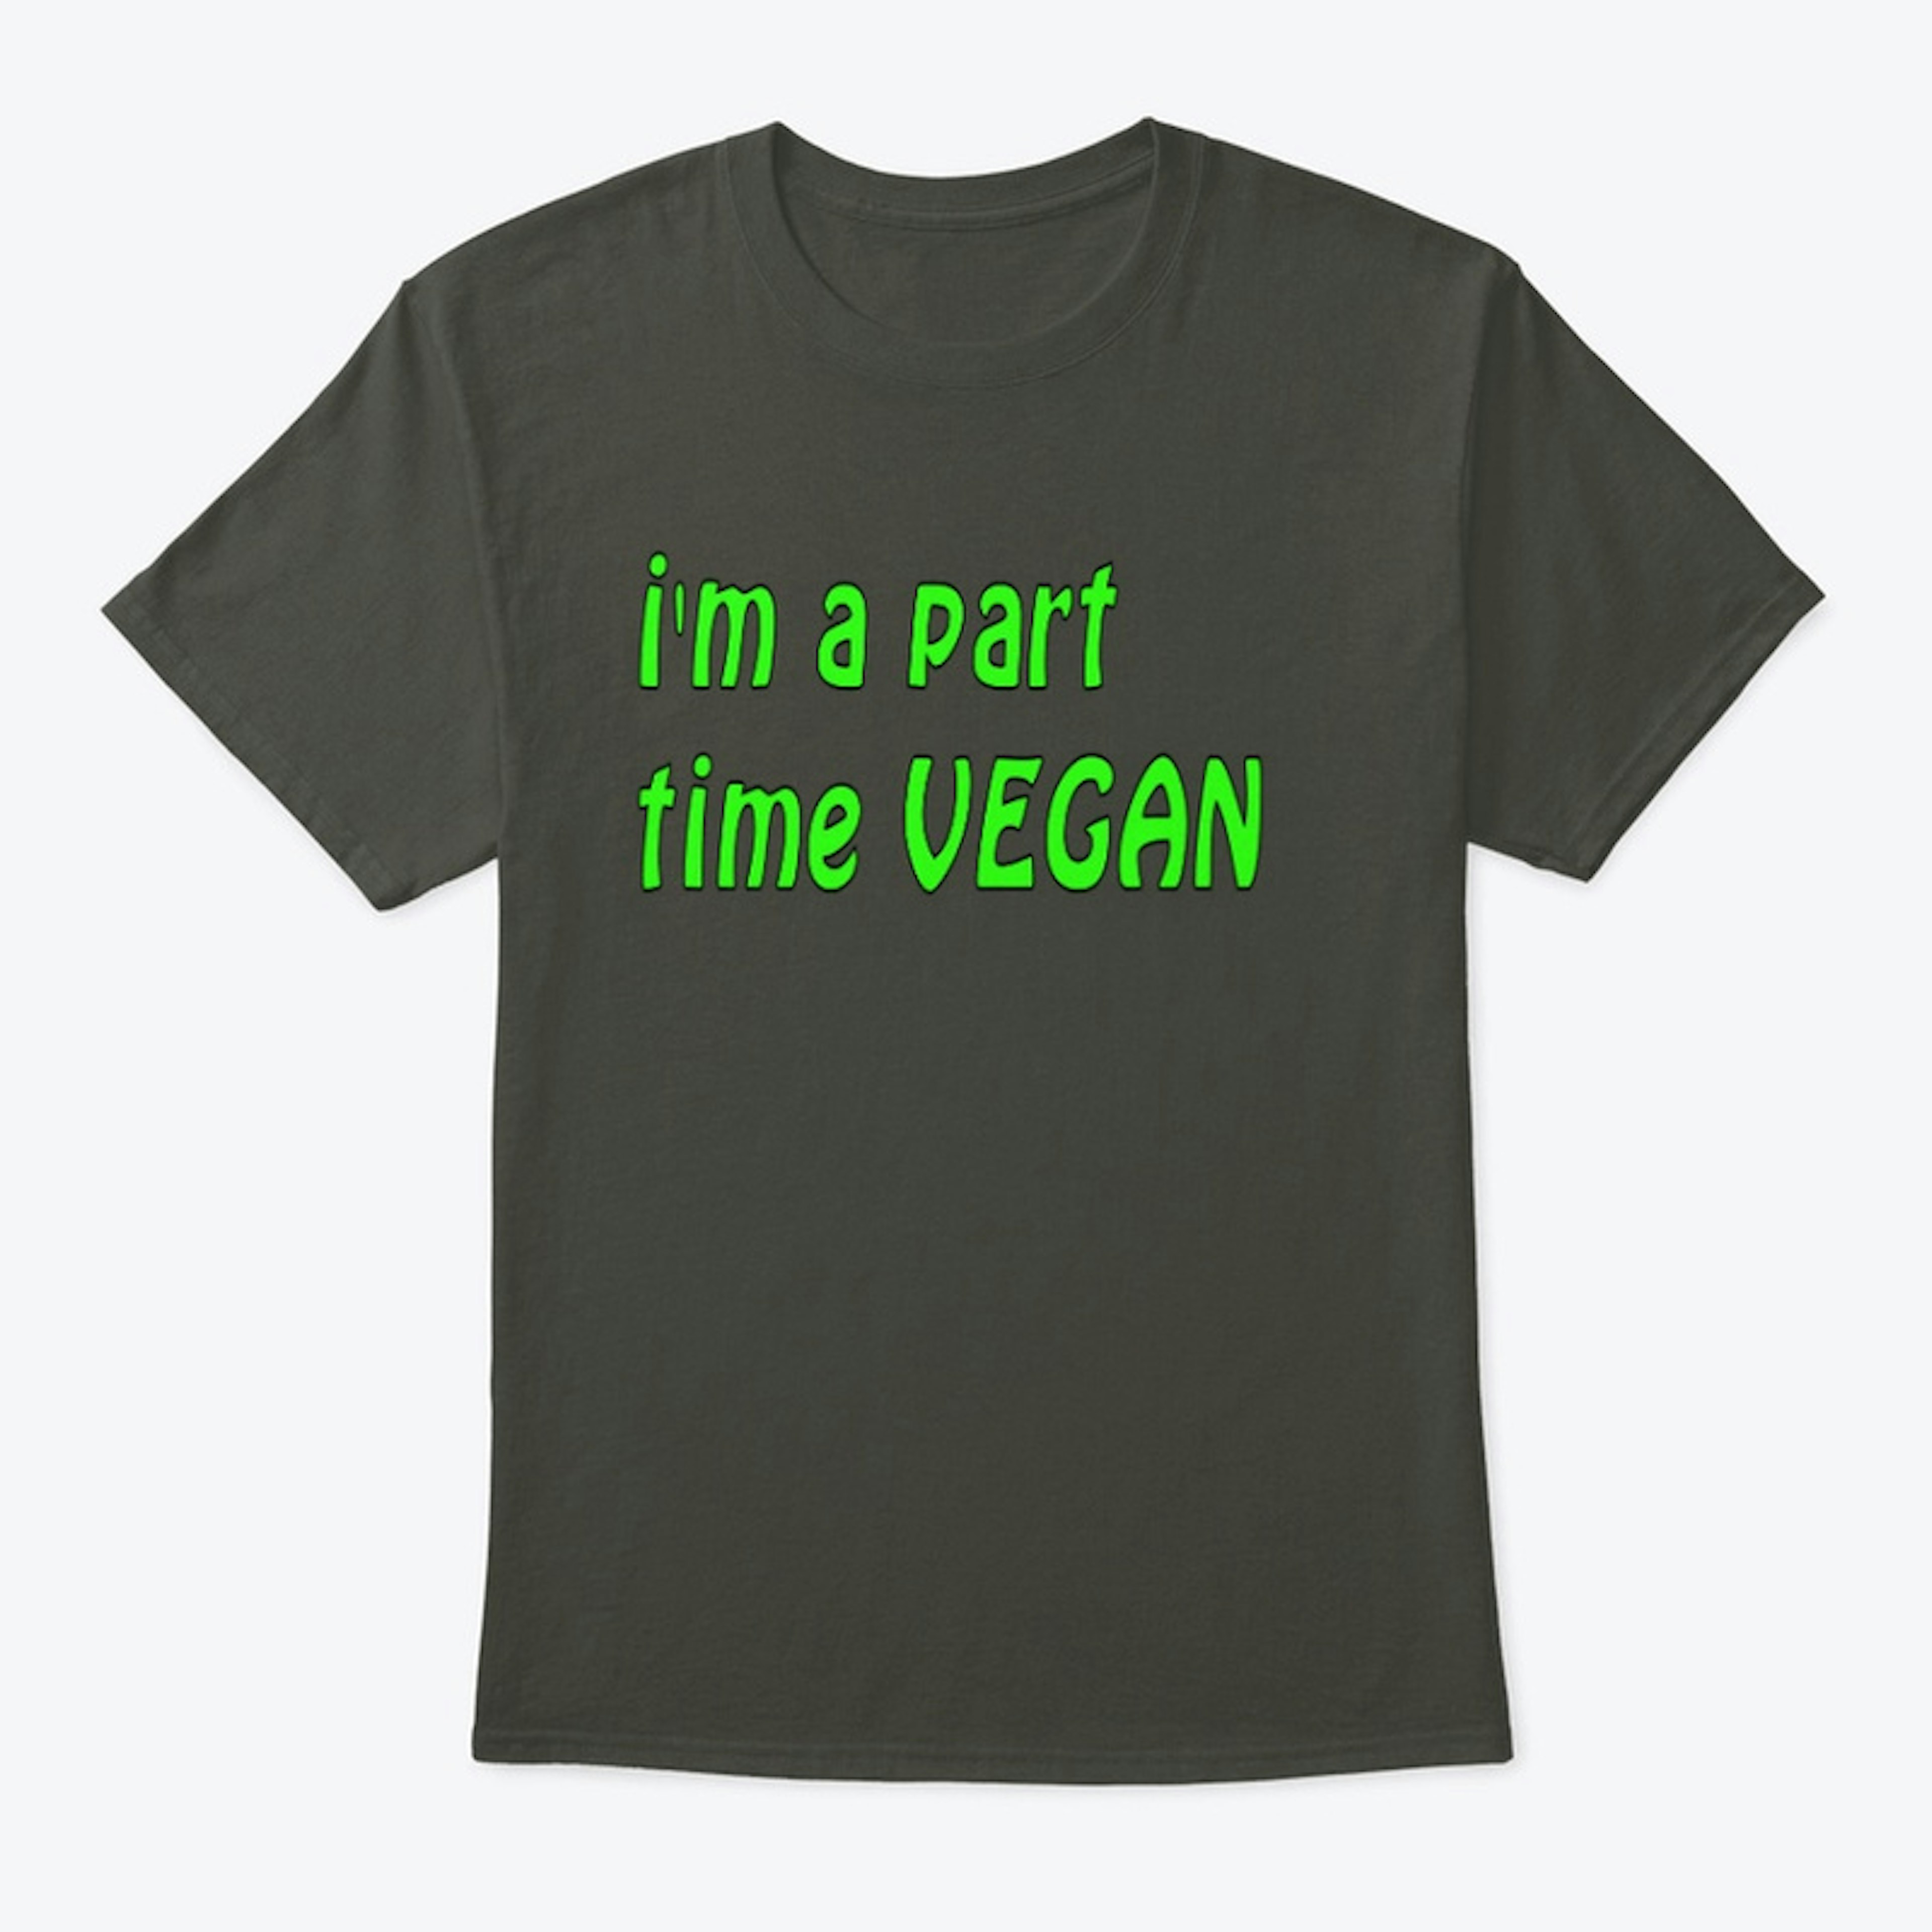 Part time vegan